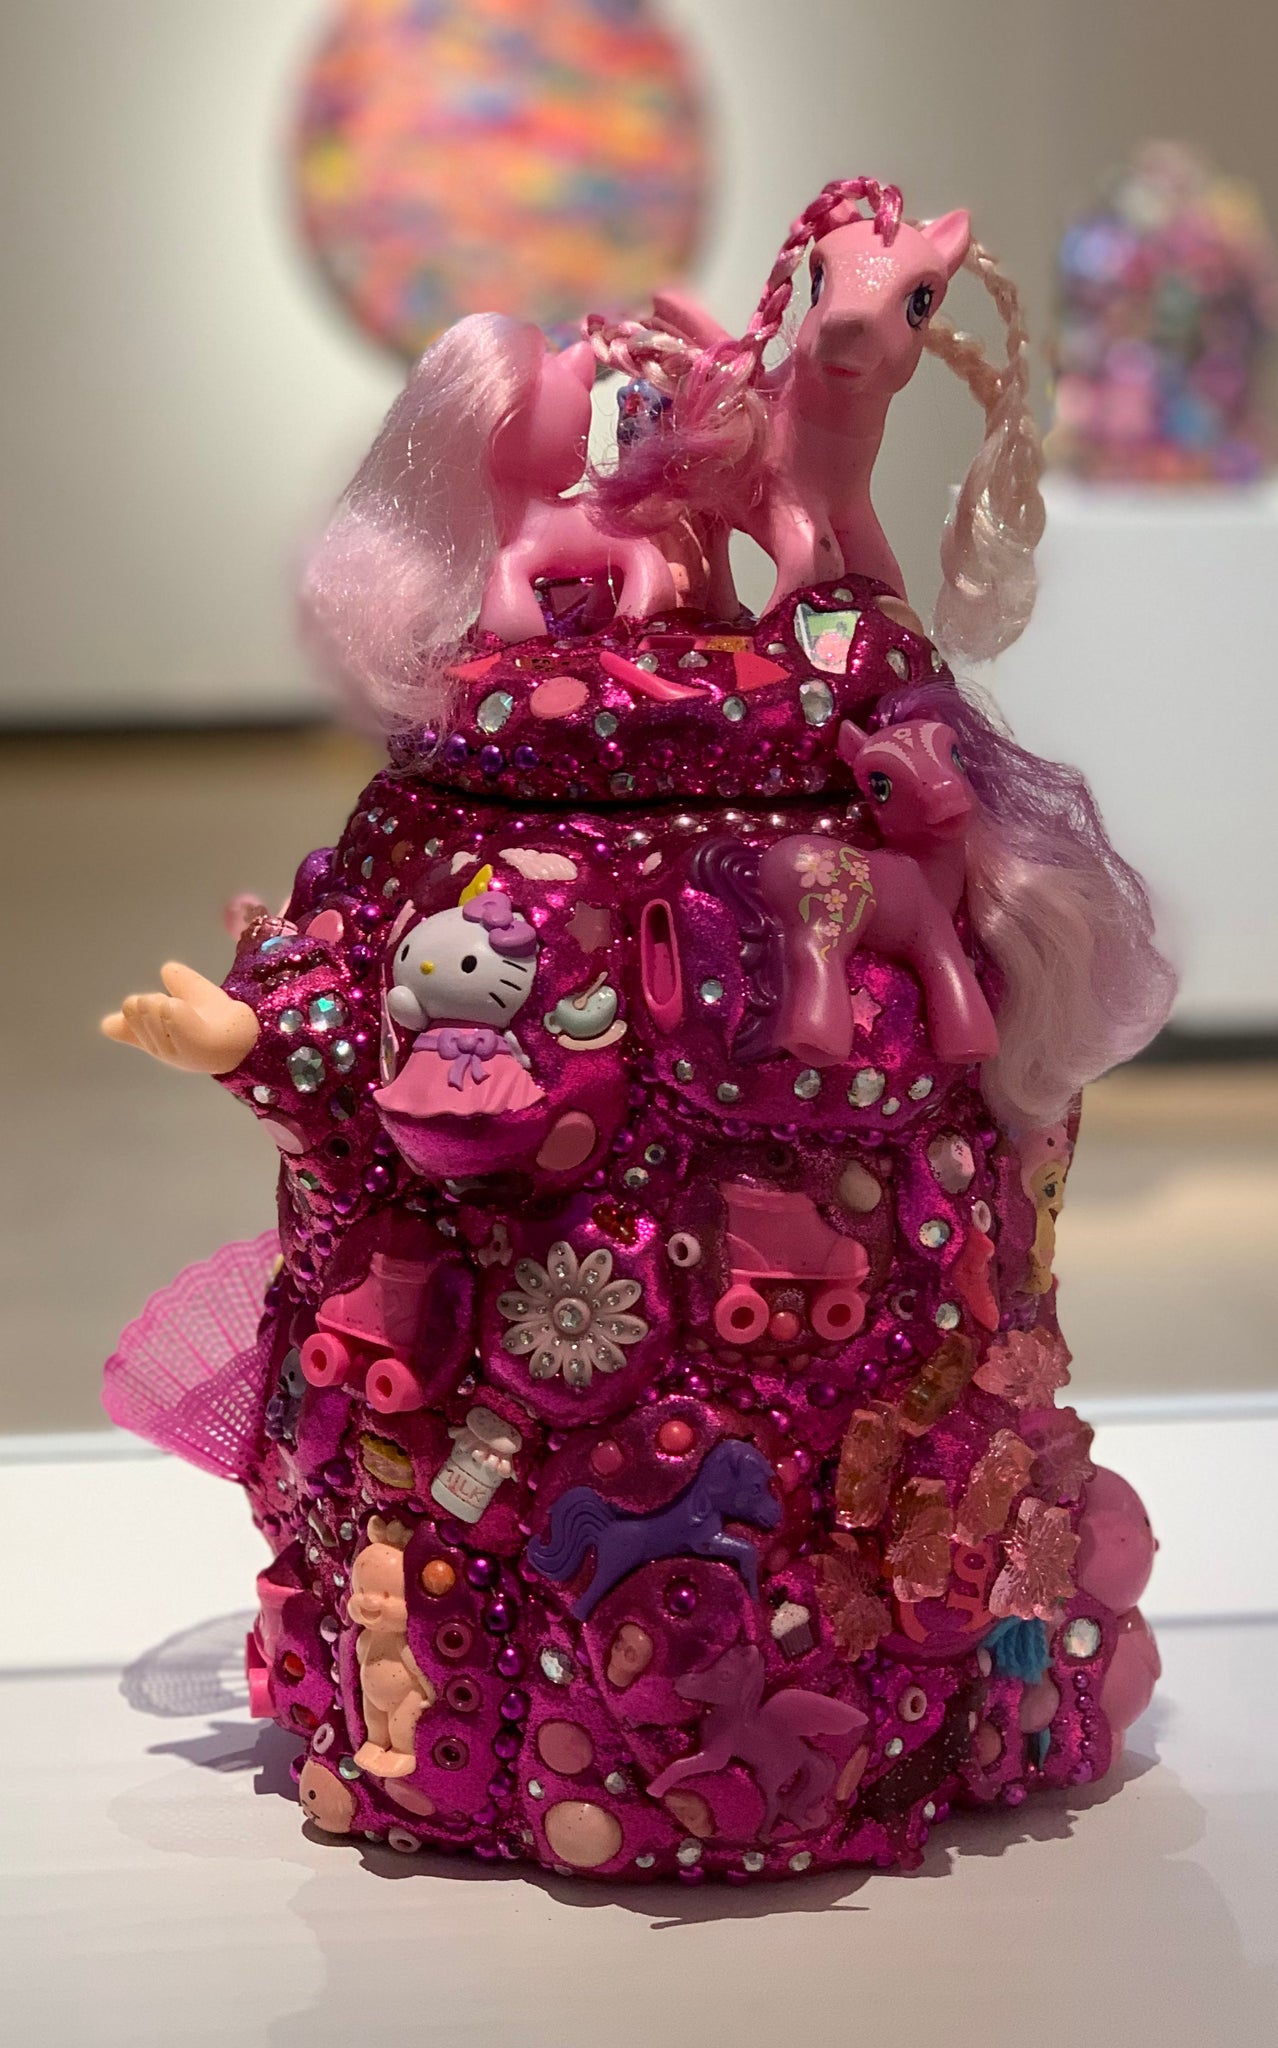 Ani Hoover, "Pink Princess Jar"